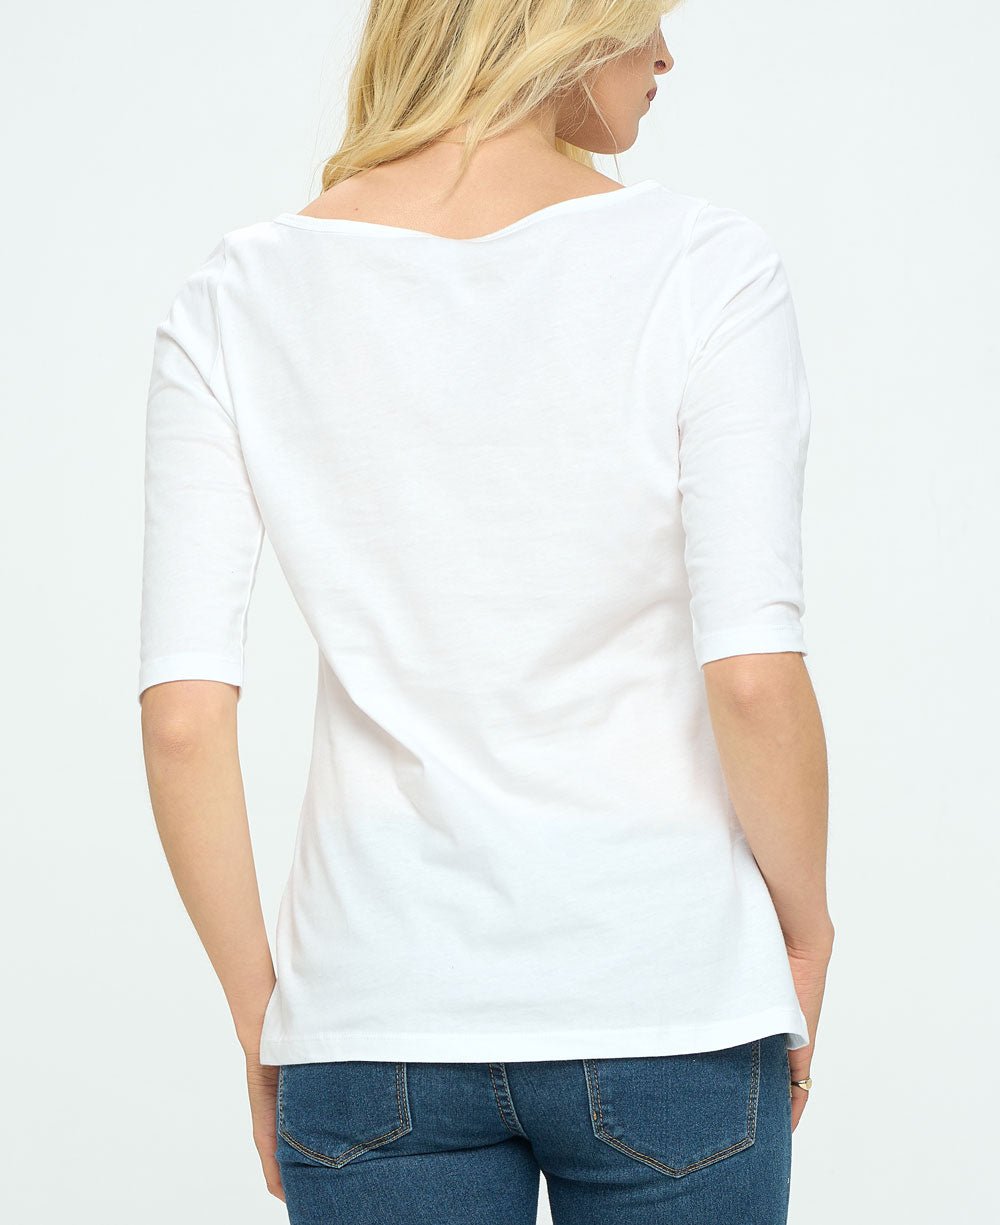 Bold Lotus Print Elbow Length Sleeve Cotton Tee - Shirts & Tops S